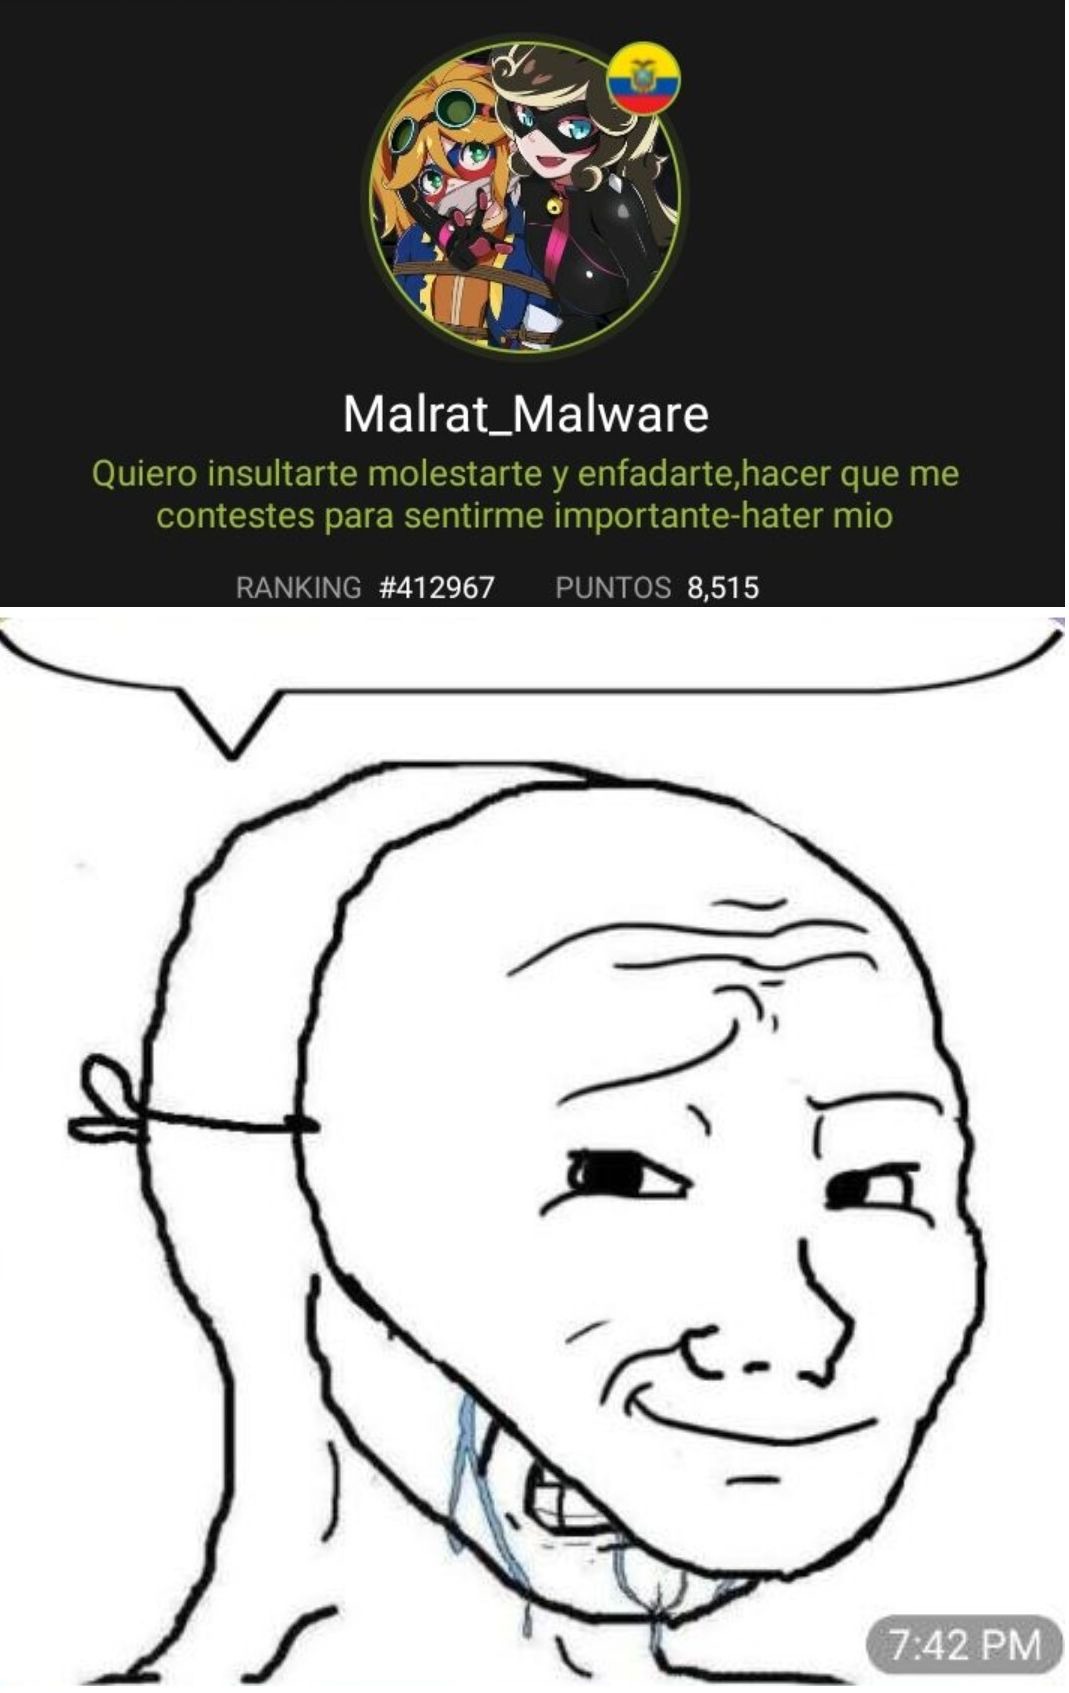 Macaco_malparido - meme